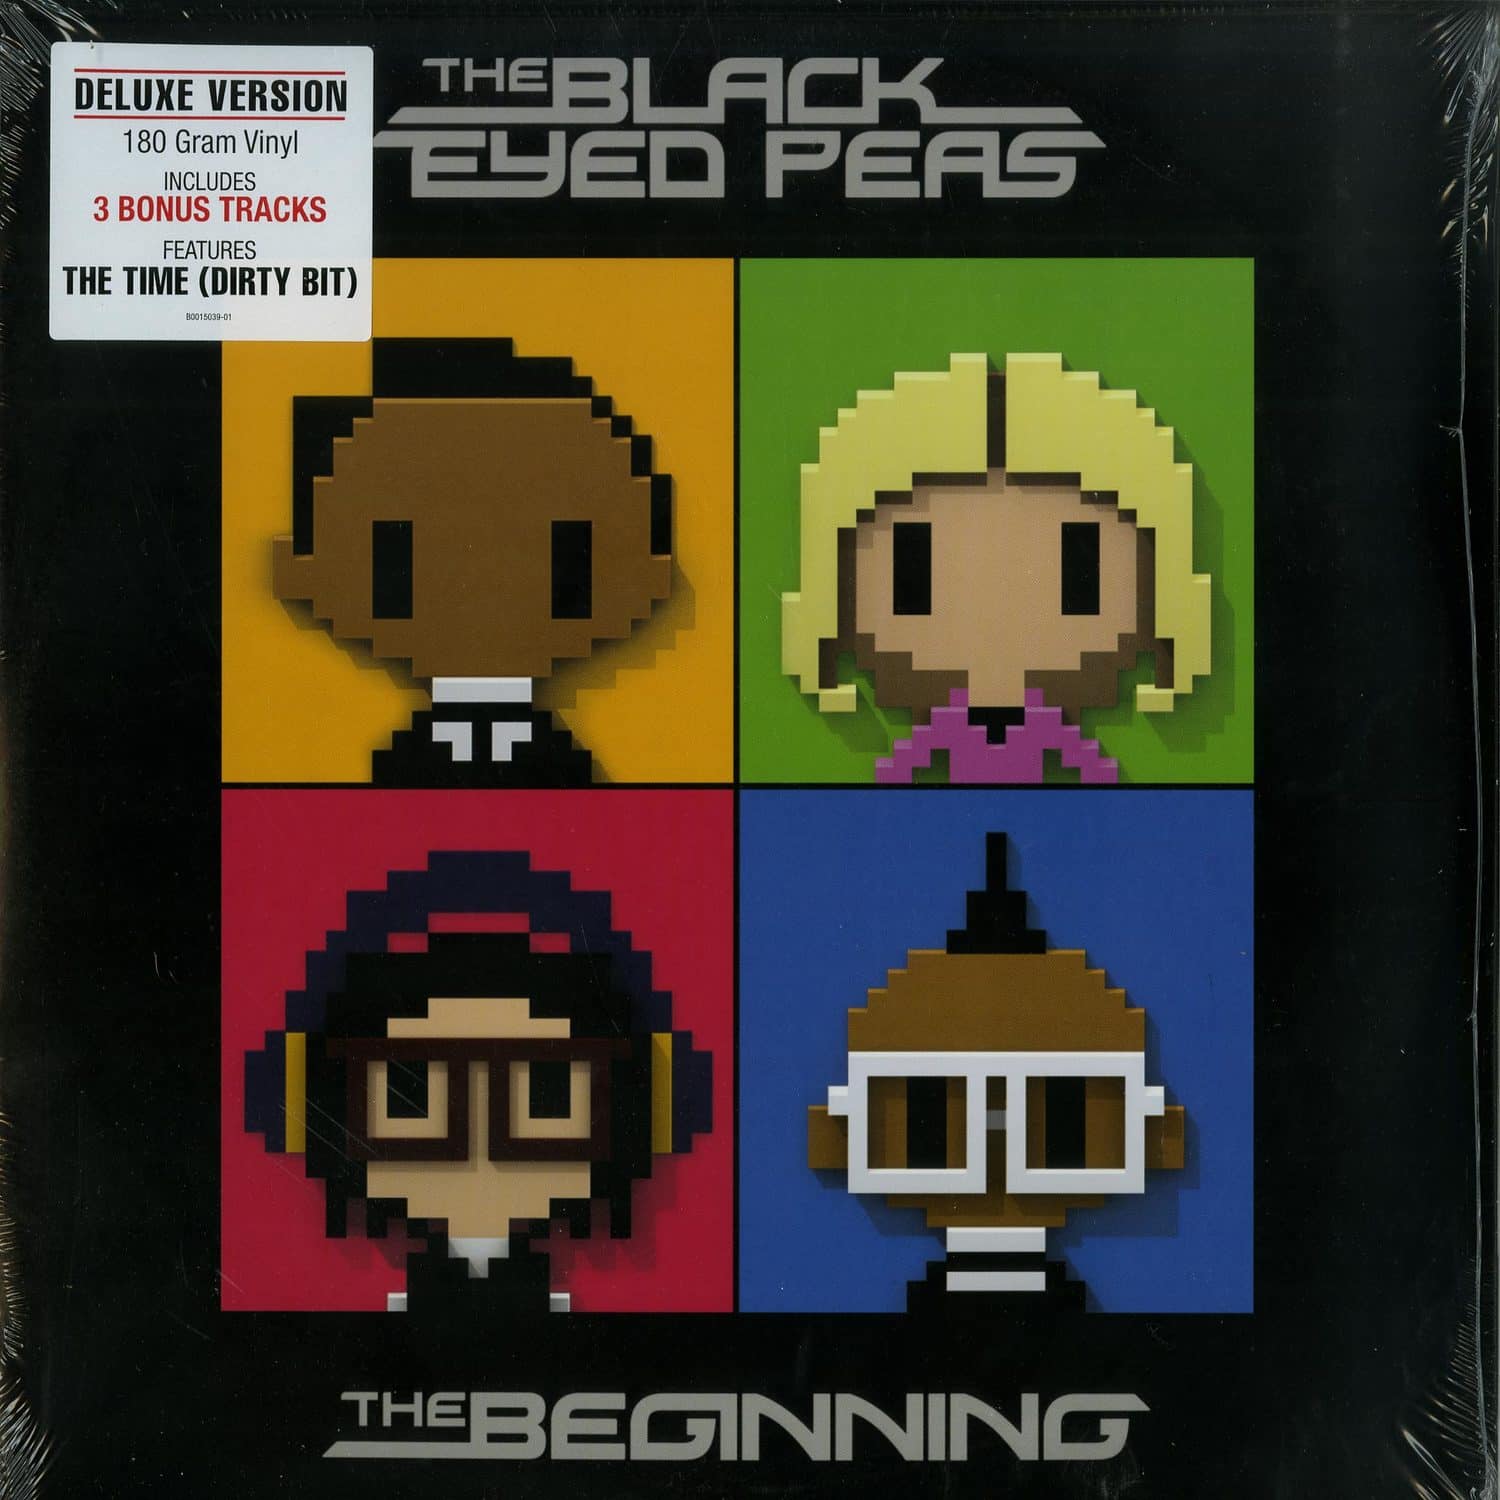 Black Eyed Peas - THE BEGINNING 